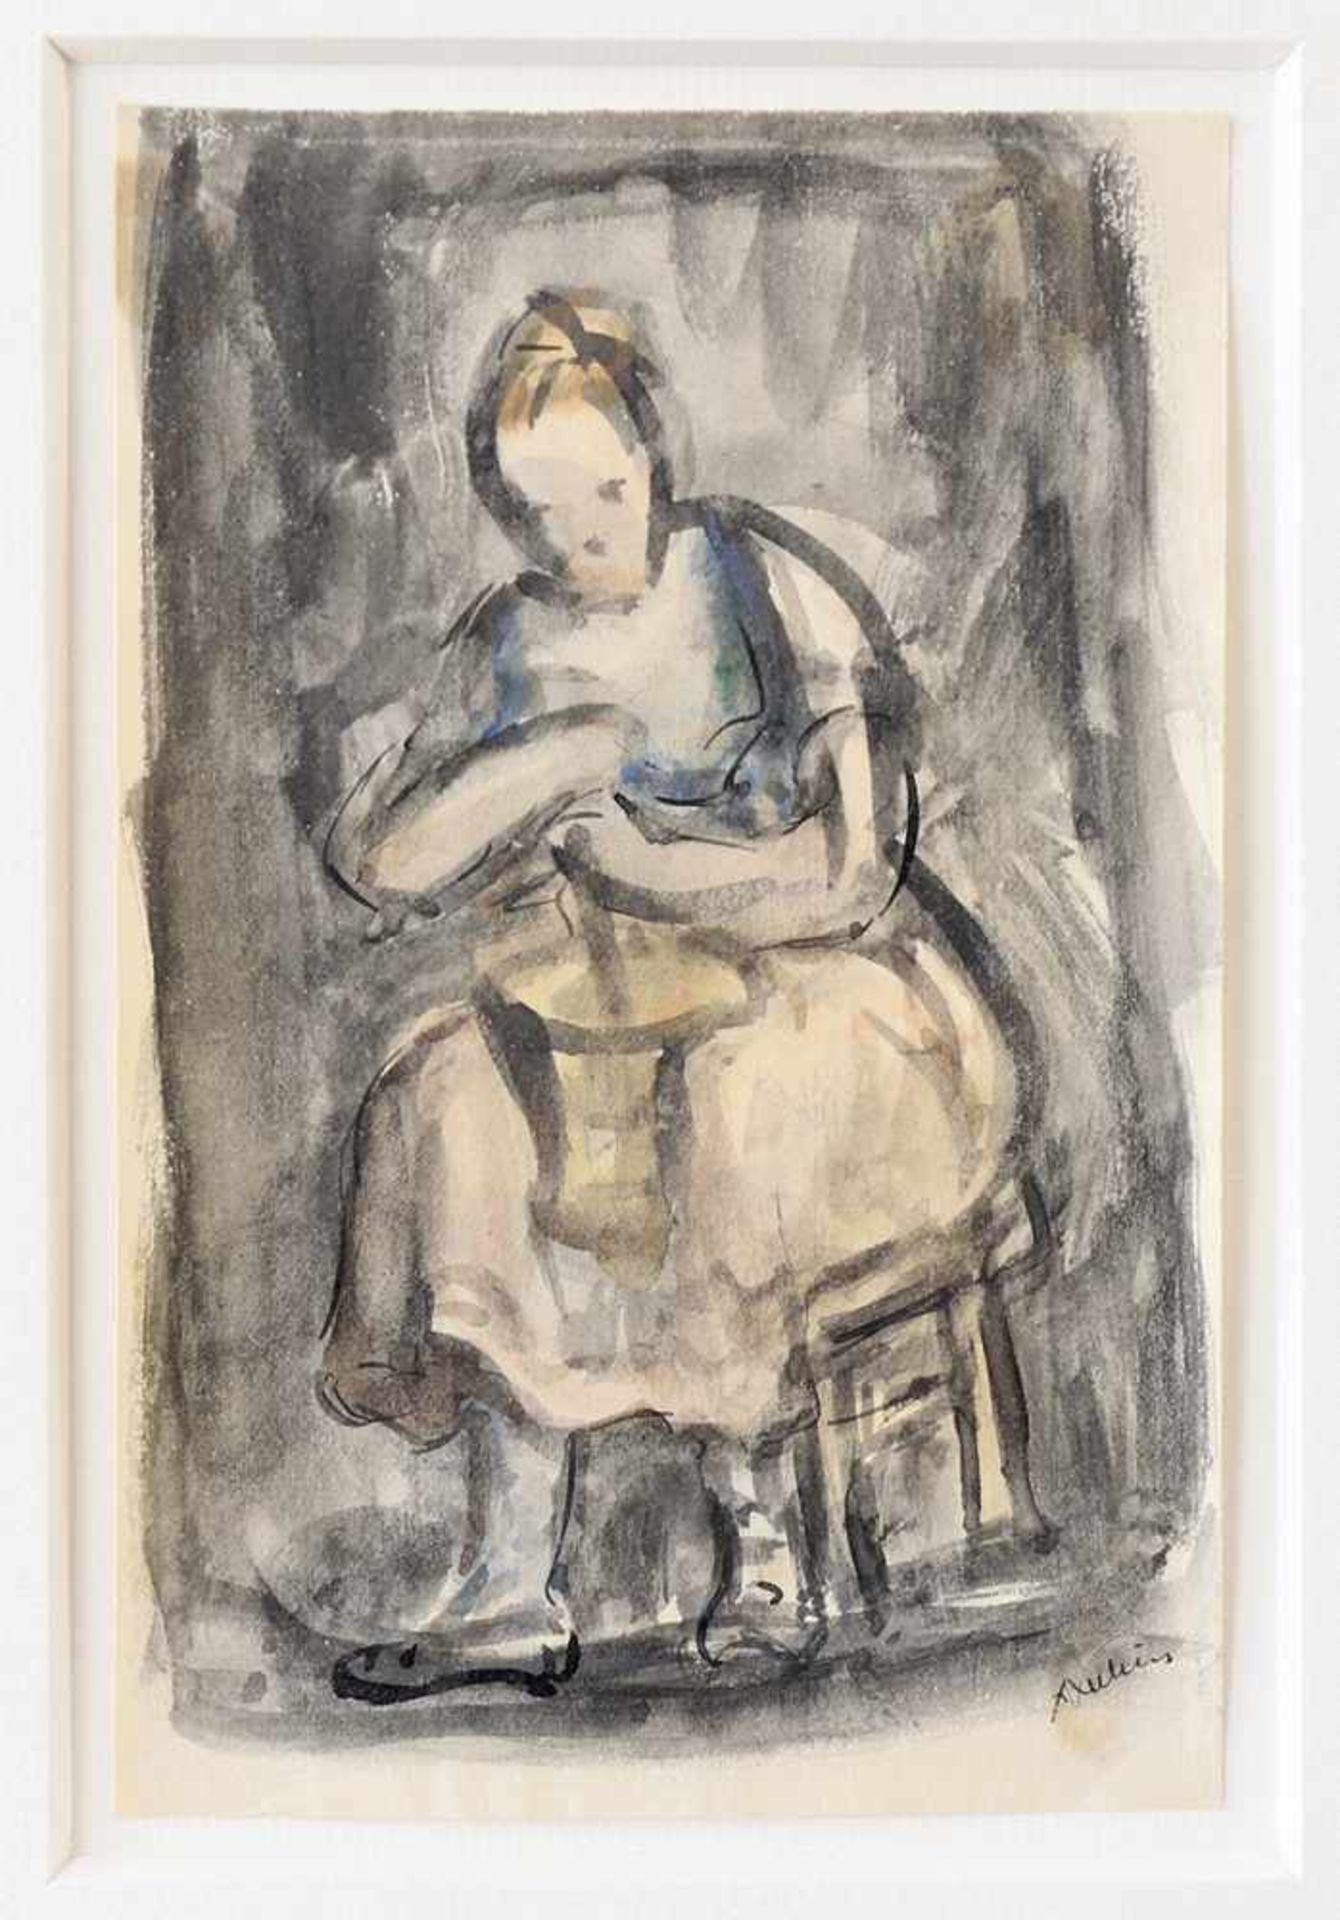 Alfred Kubin*, 1877-1959Alfred Kubin* (1877-1959), Watercolor on paperFemale farmer sitting on a